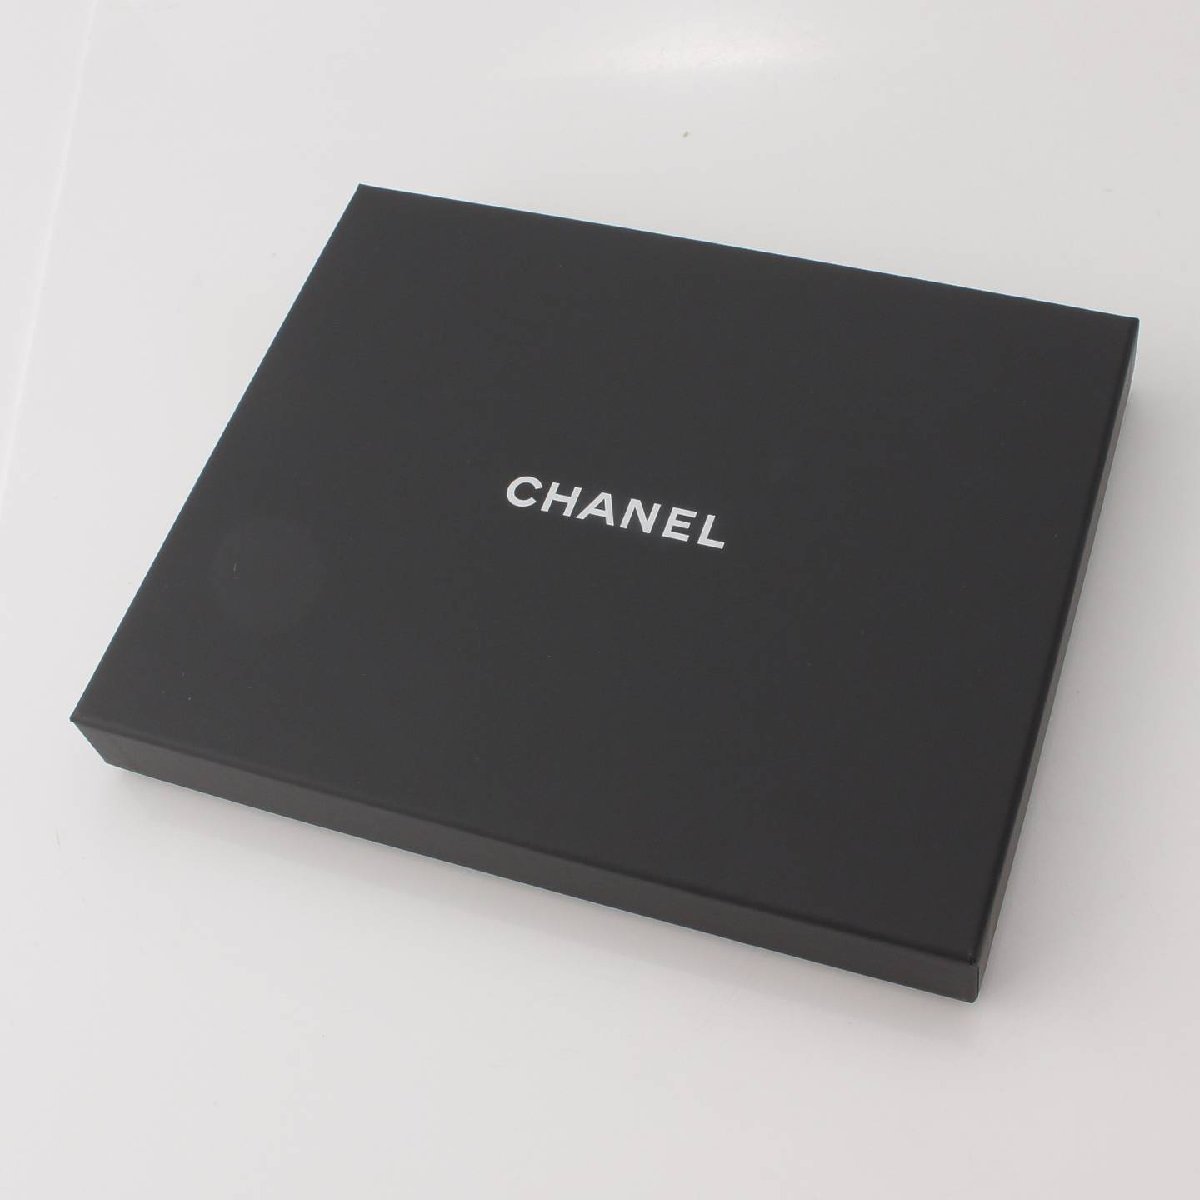 [ Chanel ]Chanel B17B здесь Mark Turn блокировка жемчуг цепь длинный колье Gold [ б/у ][ стандартный товар гарантия ]199080